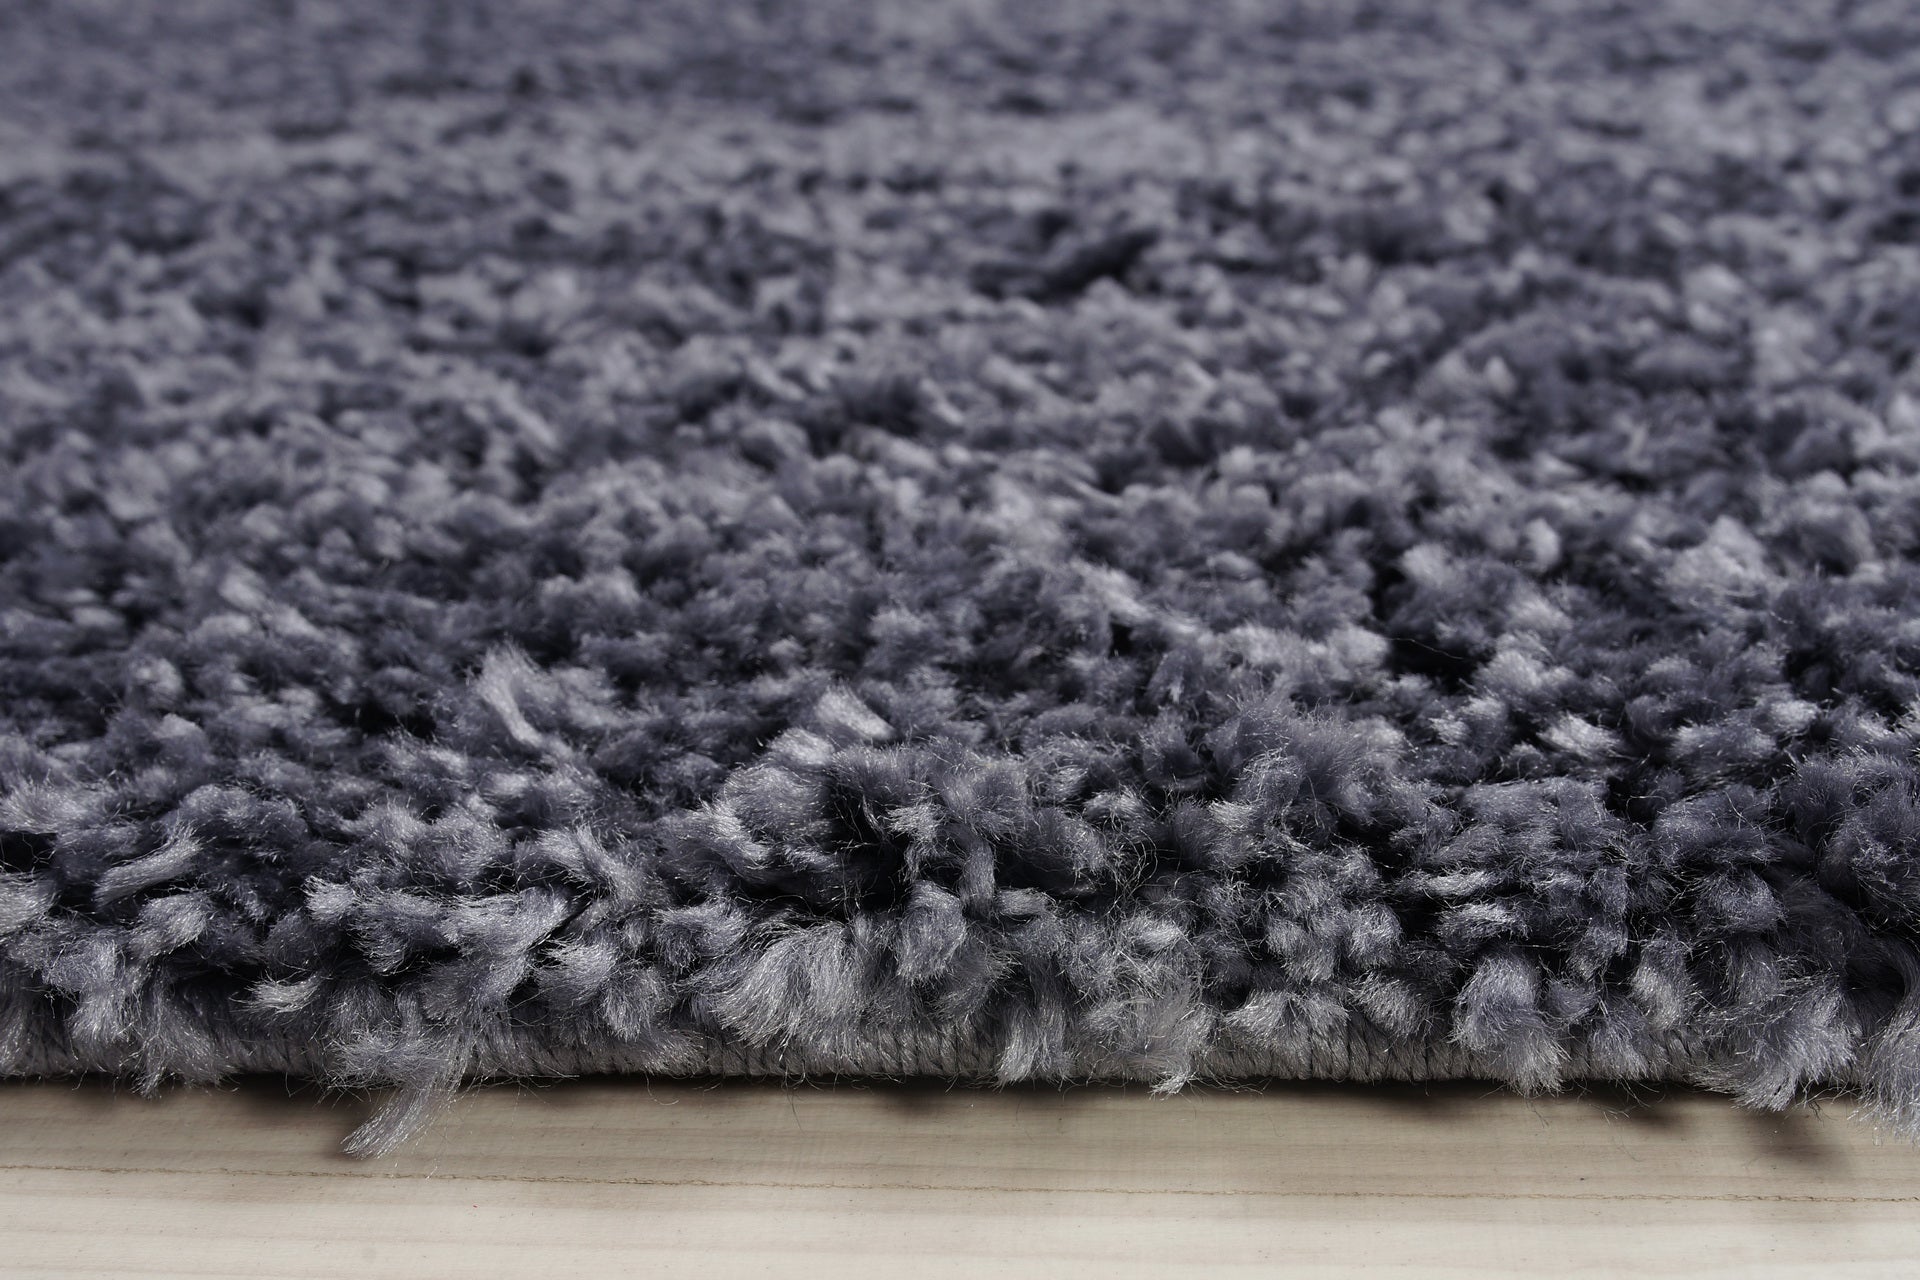 ladole rugs solid color shaggy meknes durable beautiful turkish indoor small mat doormat rug in gray 110 x 211 57cm x 90cm 6x8, 6x9 ft Living Room, Bedroom, Dining Area, Kitchen Carpet